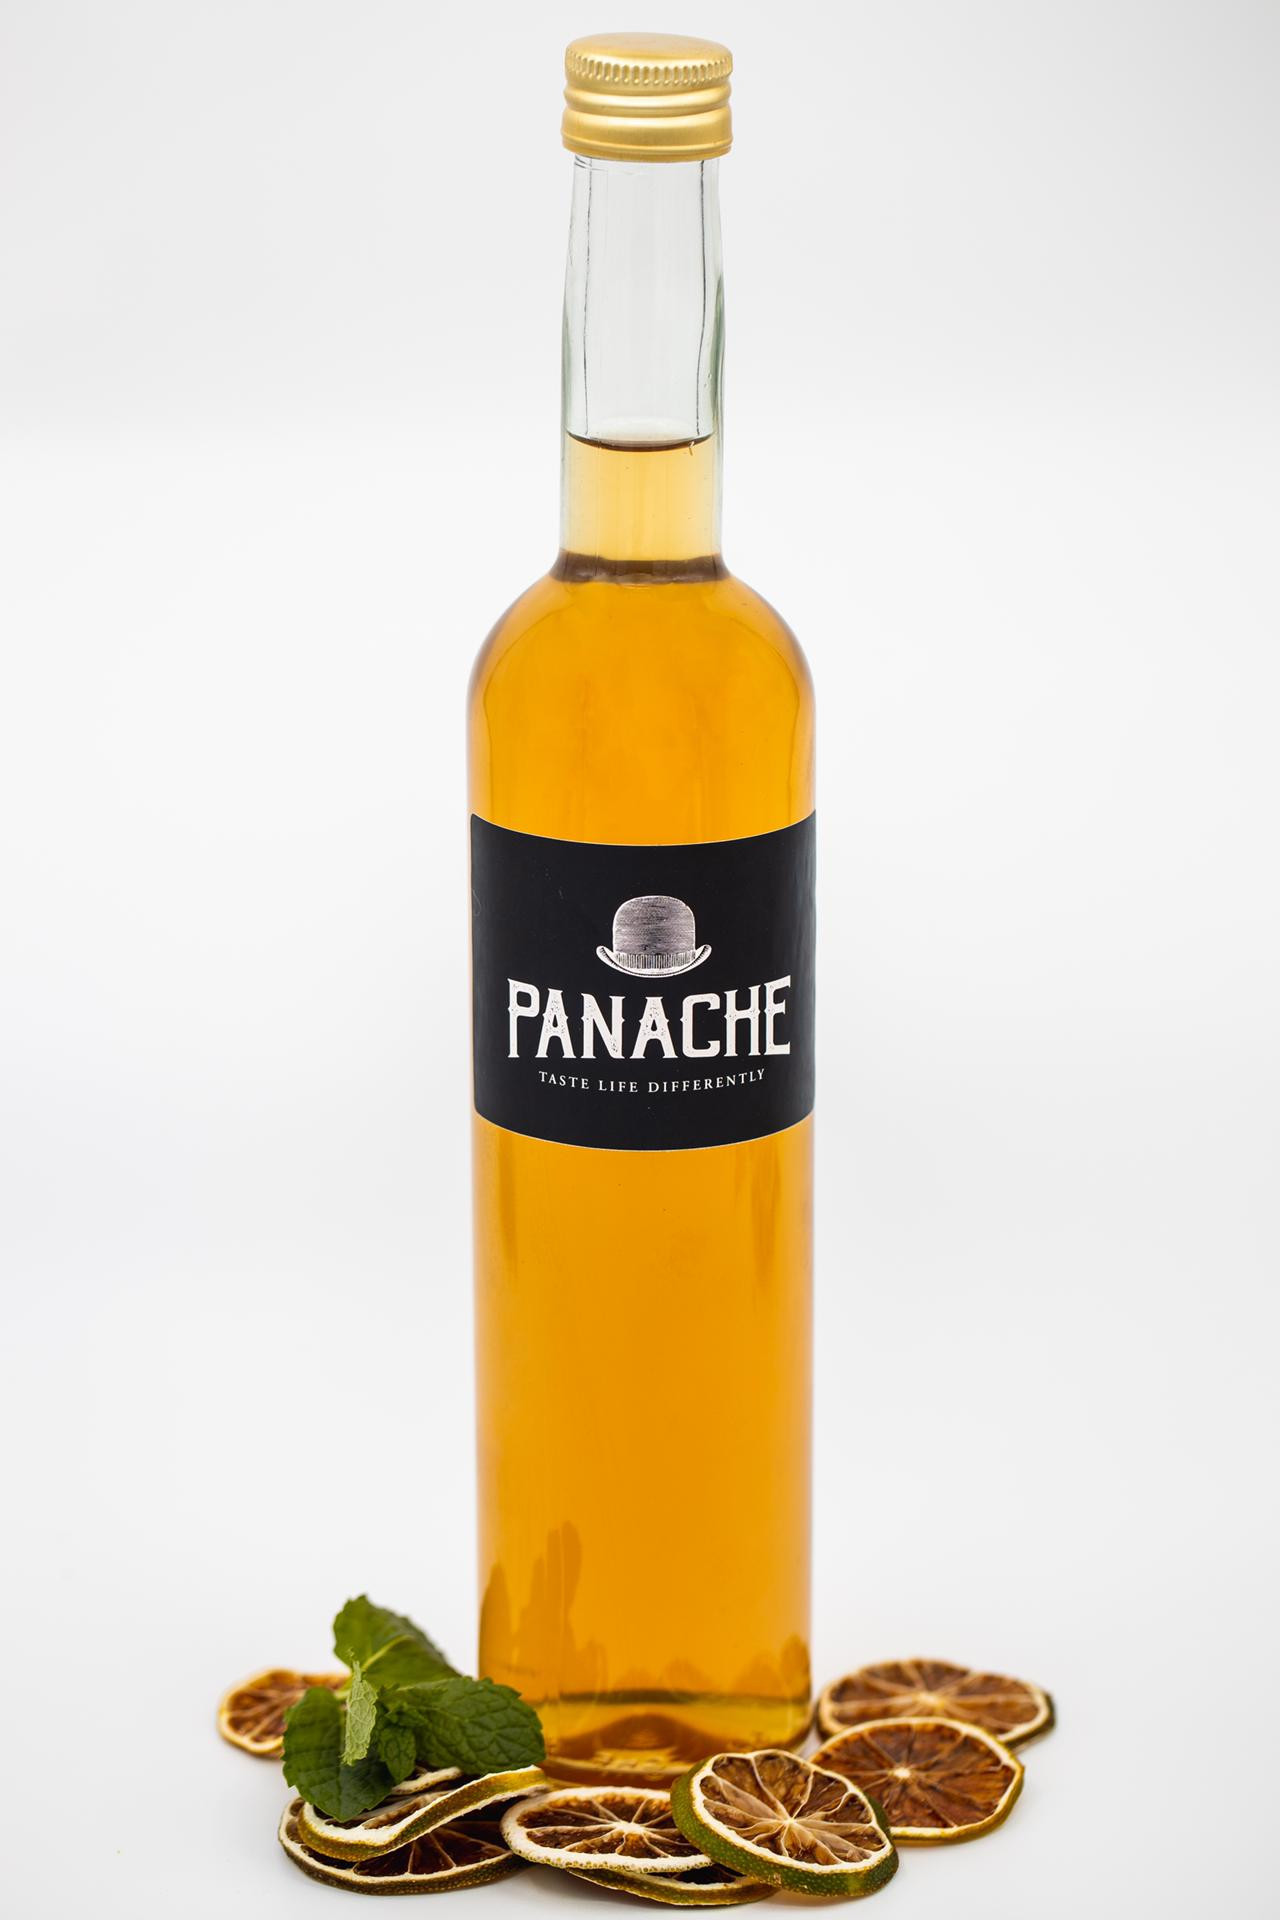 Taste Panache - Horse's Neck - image